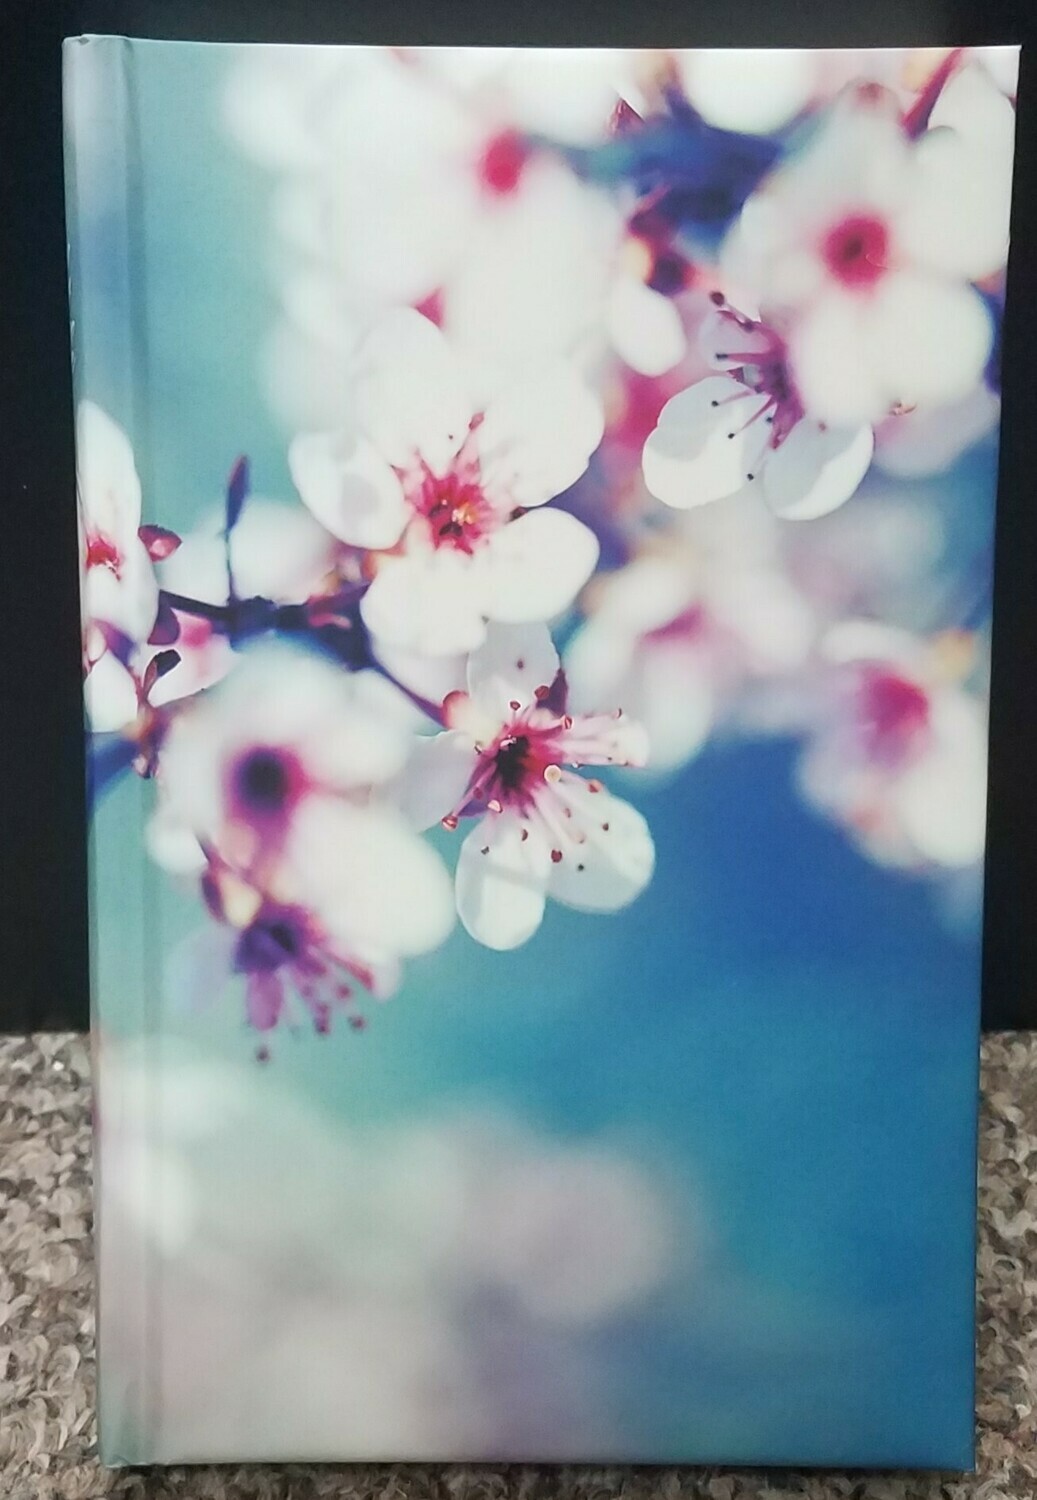 NIV Impression Bible Cover Edition - Cherry Blossom Print